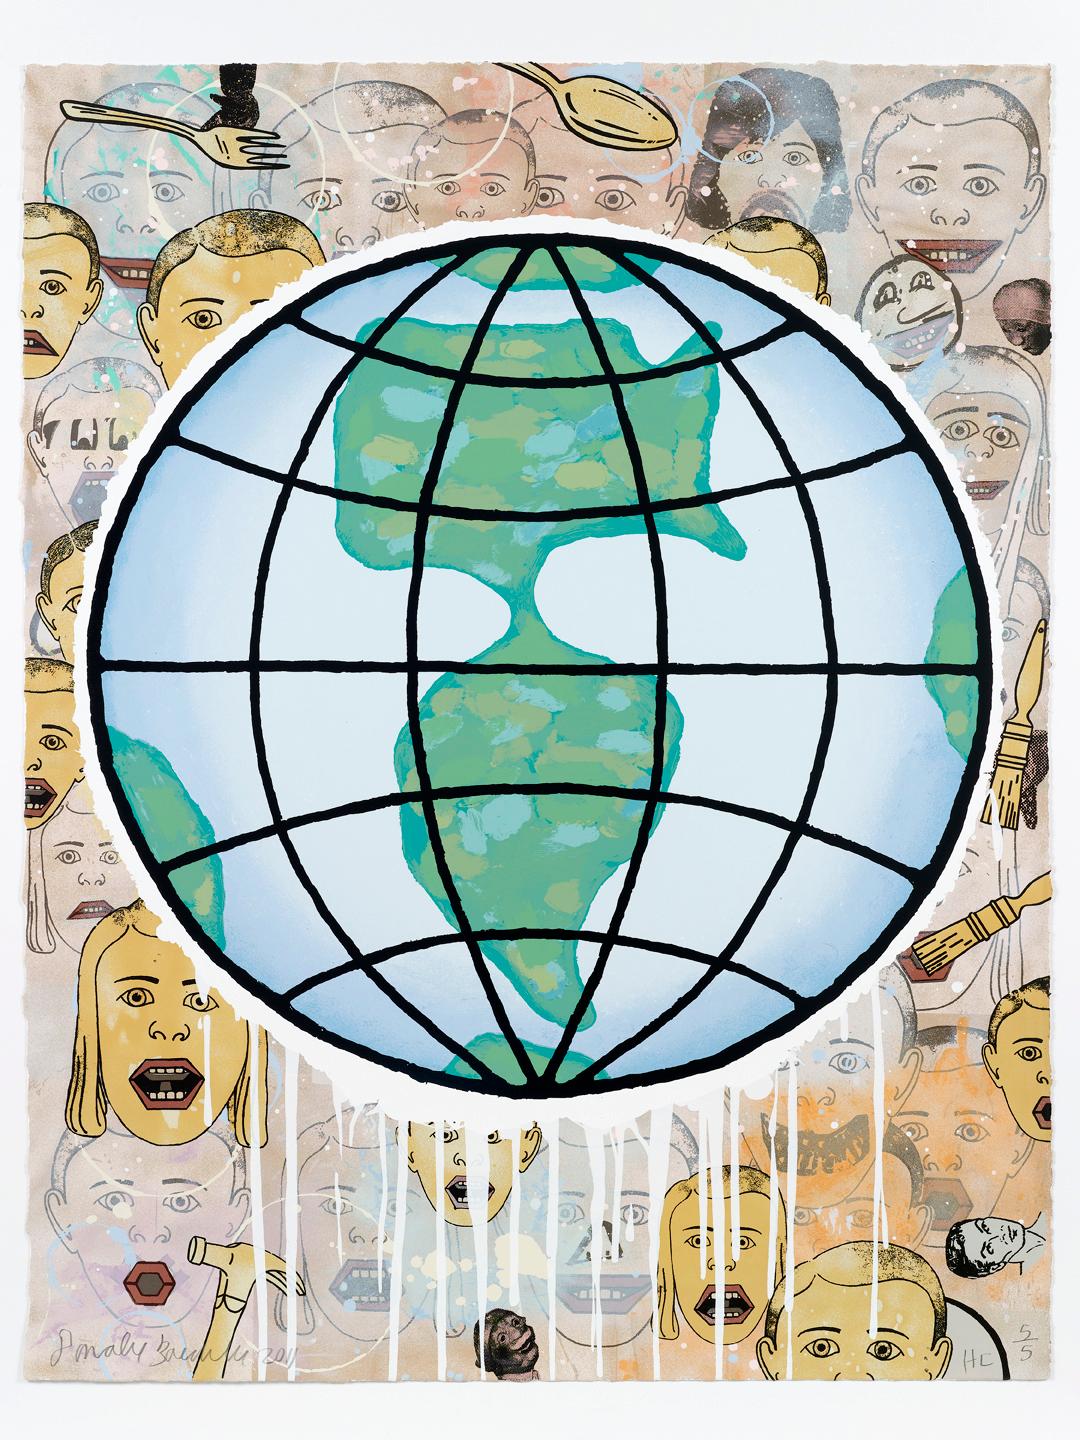 Lincoln Center Globe by Donald Baechler (image of children around the globe)